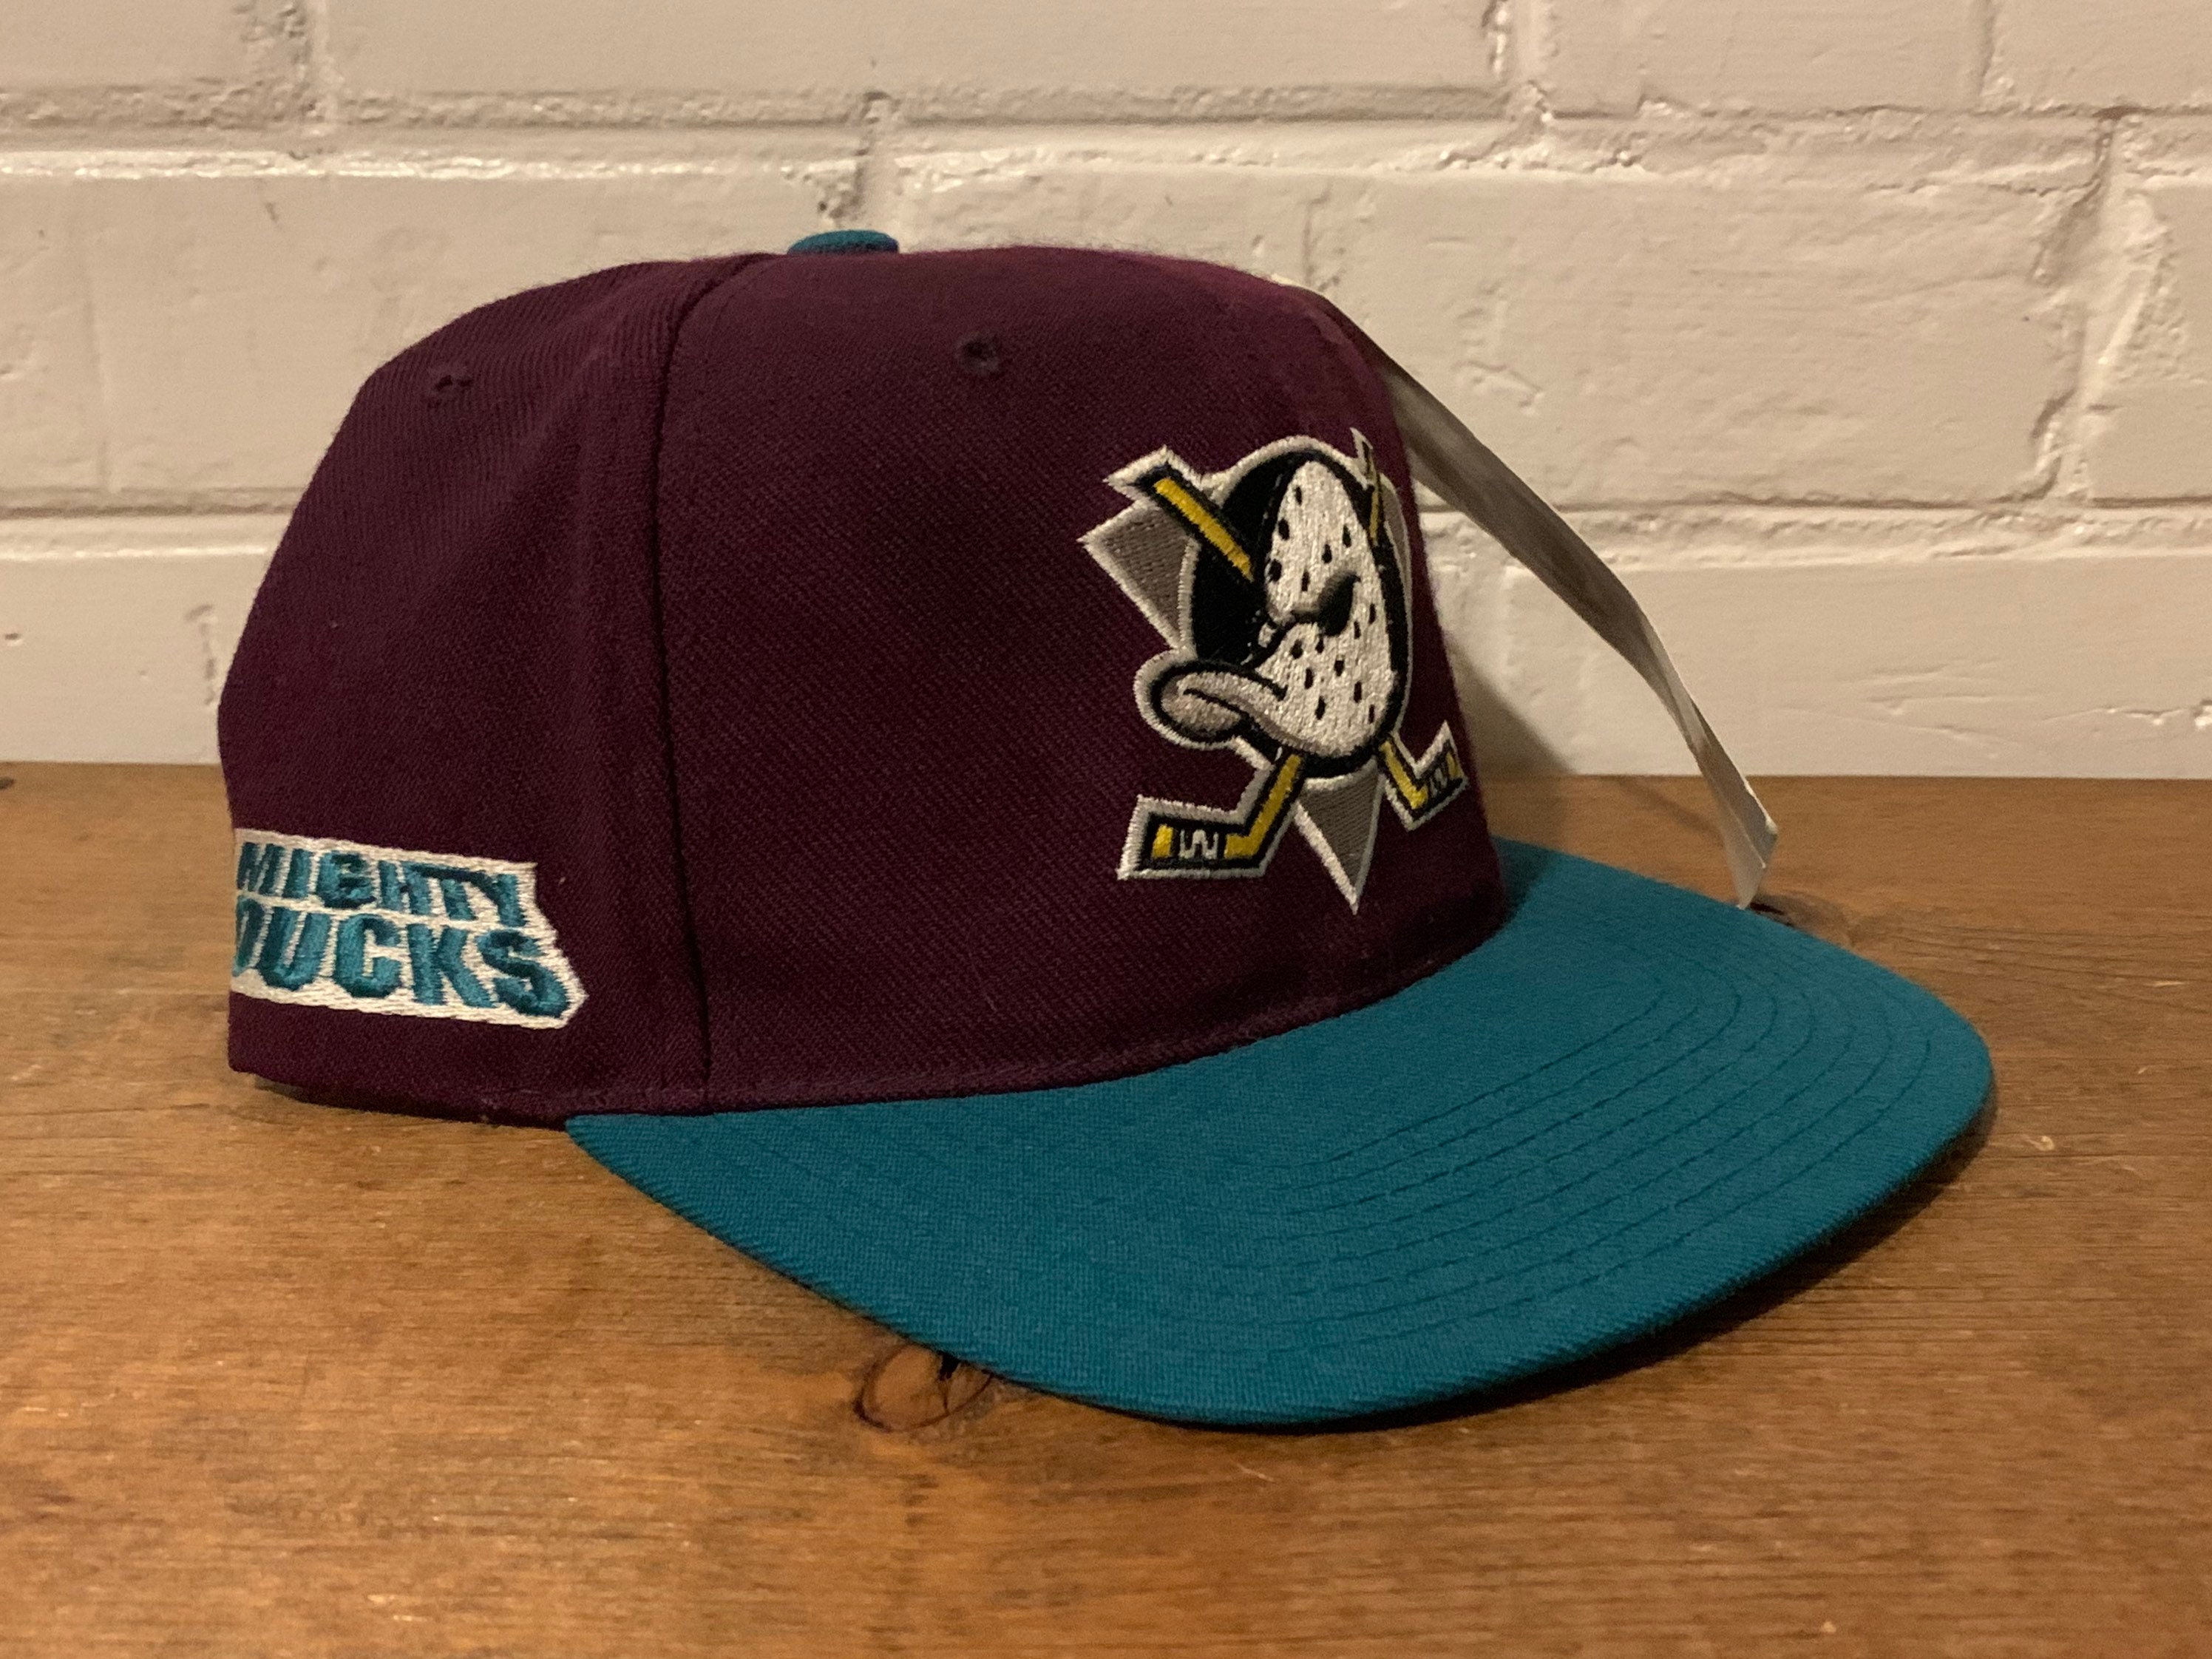 Vintage 90s Anaheim Mighty Ducks SnapBack - Depop